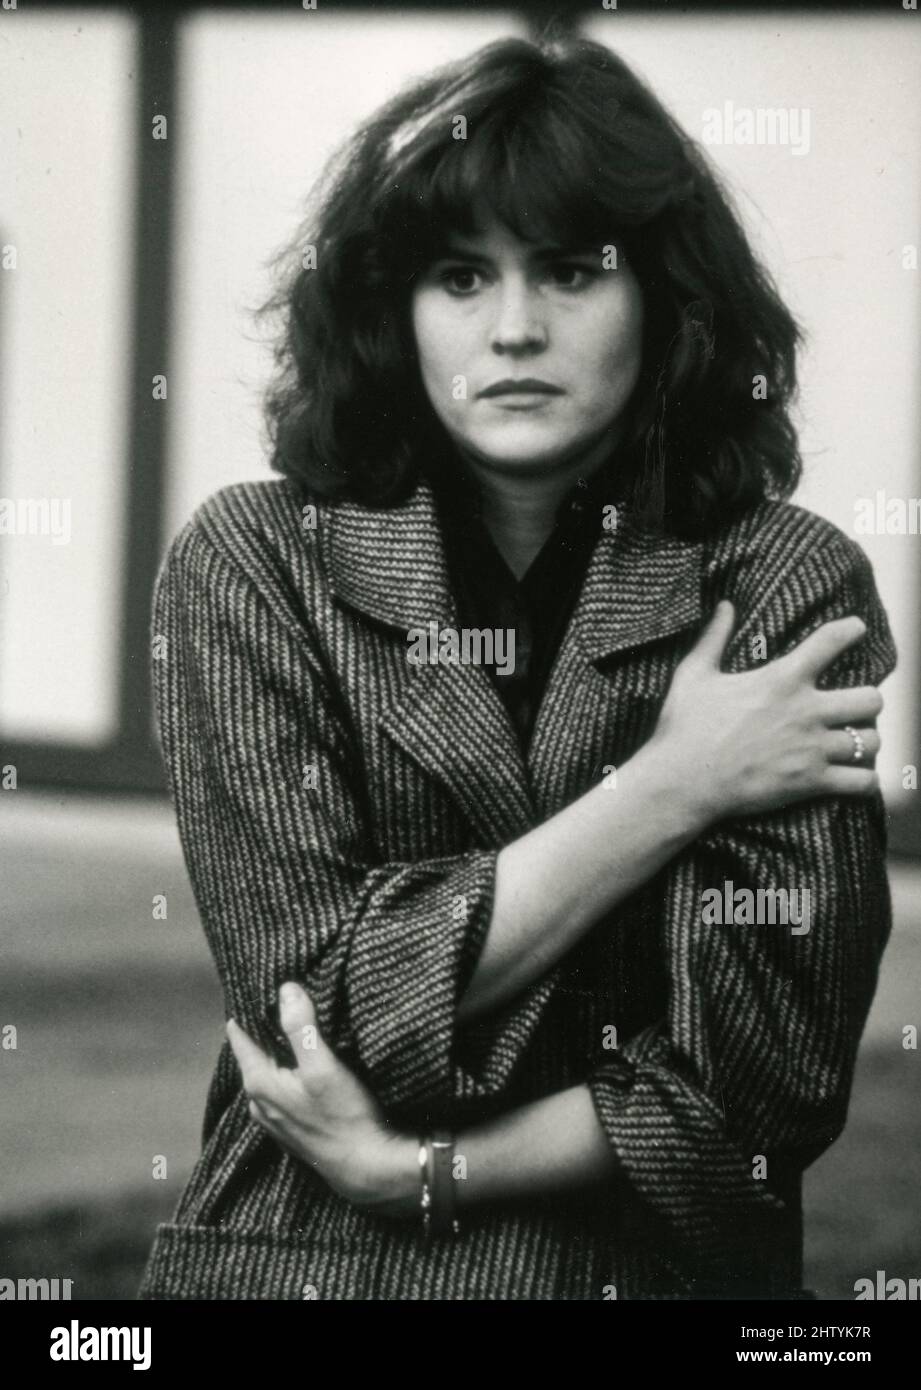 L'attrice americana Ally Sheedy nel film Fear, USA 1990 Foto Stock